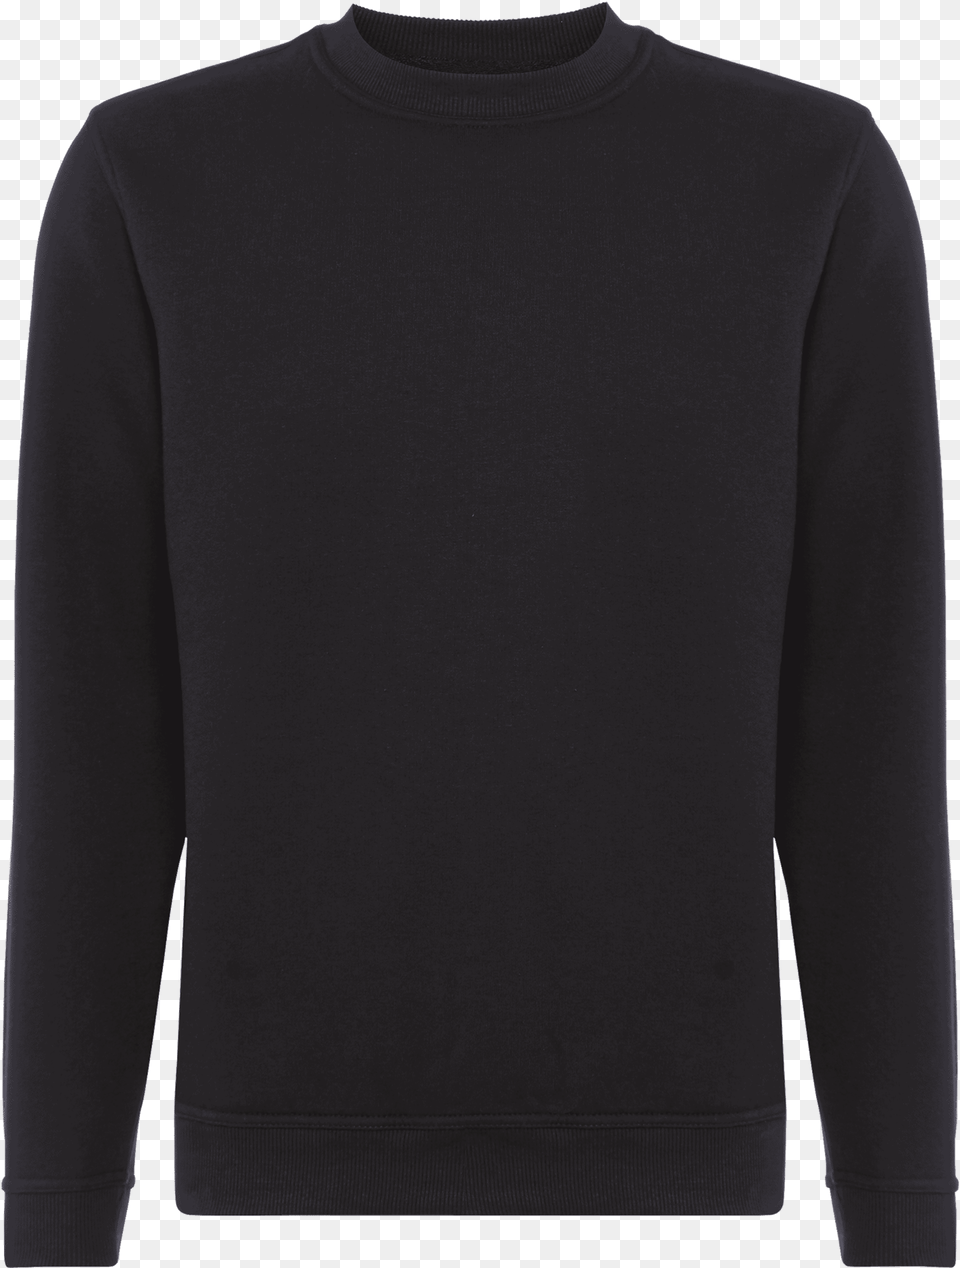 Classic Sweatshirt Sweatshirts Amp Hoodies School Plain Black Cardigan, Clothing, Knitwear, Long Sleeve, Sleeve Free Png